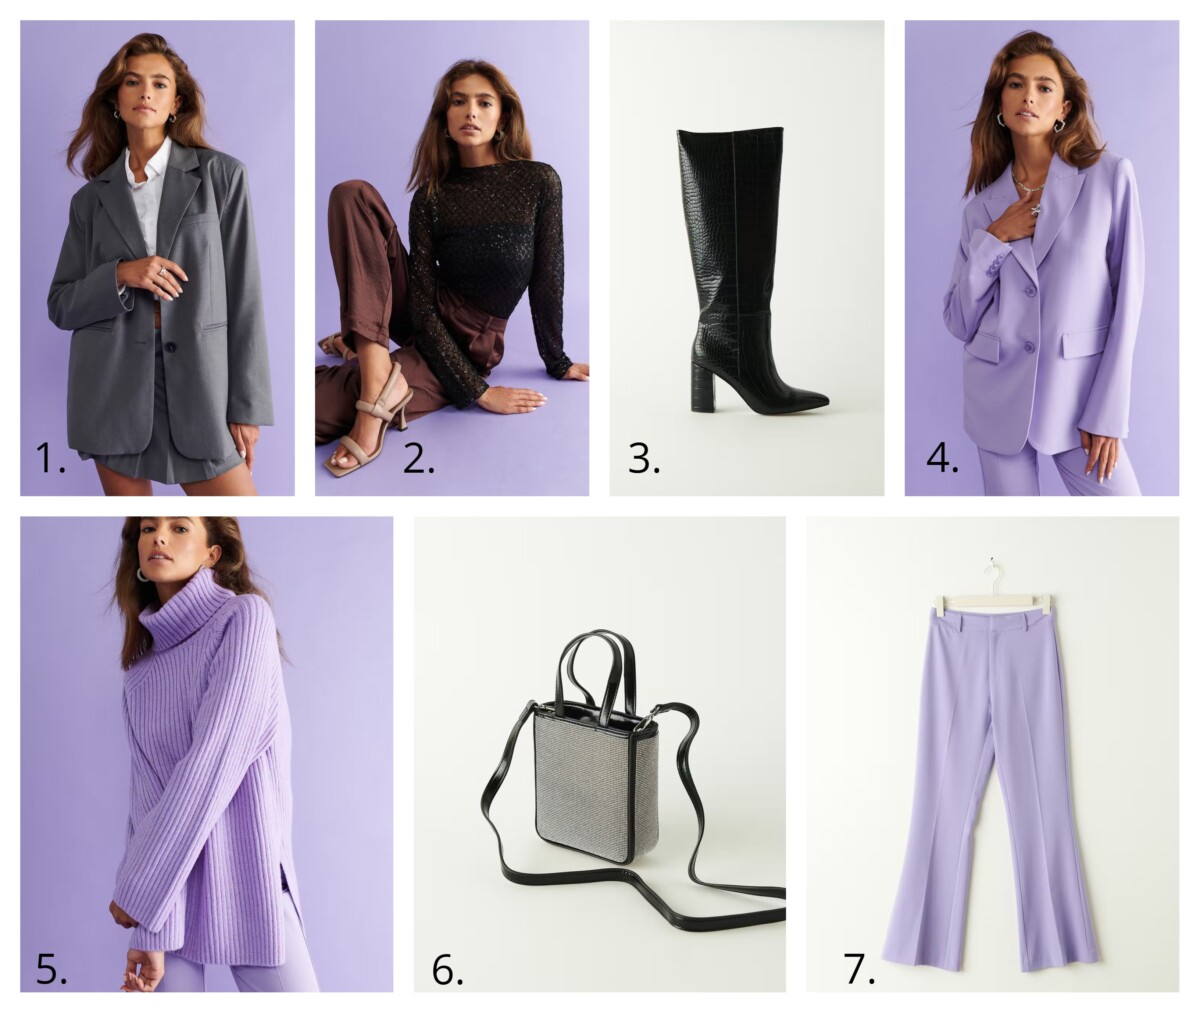 wants-ginatricot-powersuits-bianca-kolleksjon-collection-want-isalicious-isalicous1-mote-trend-stil-antrekk-klær-shopping-outfit-dress-kjoler-